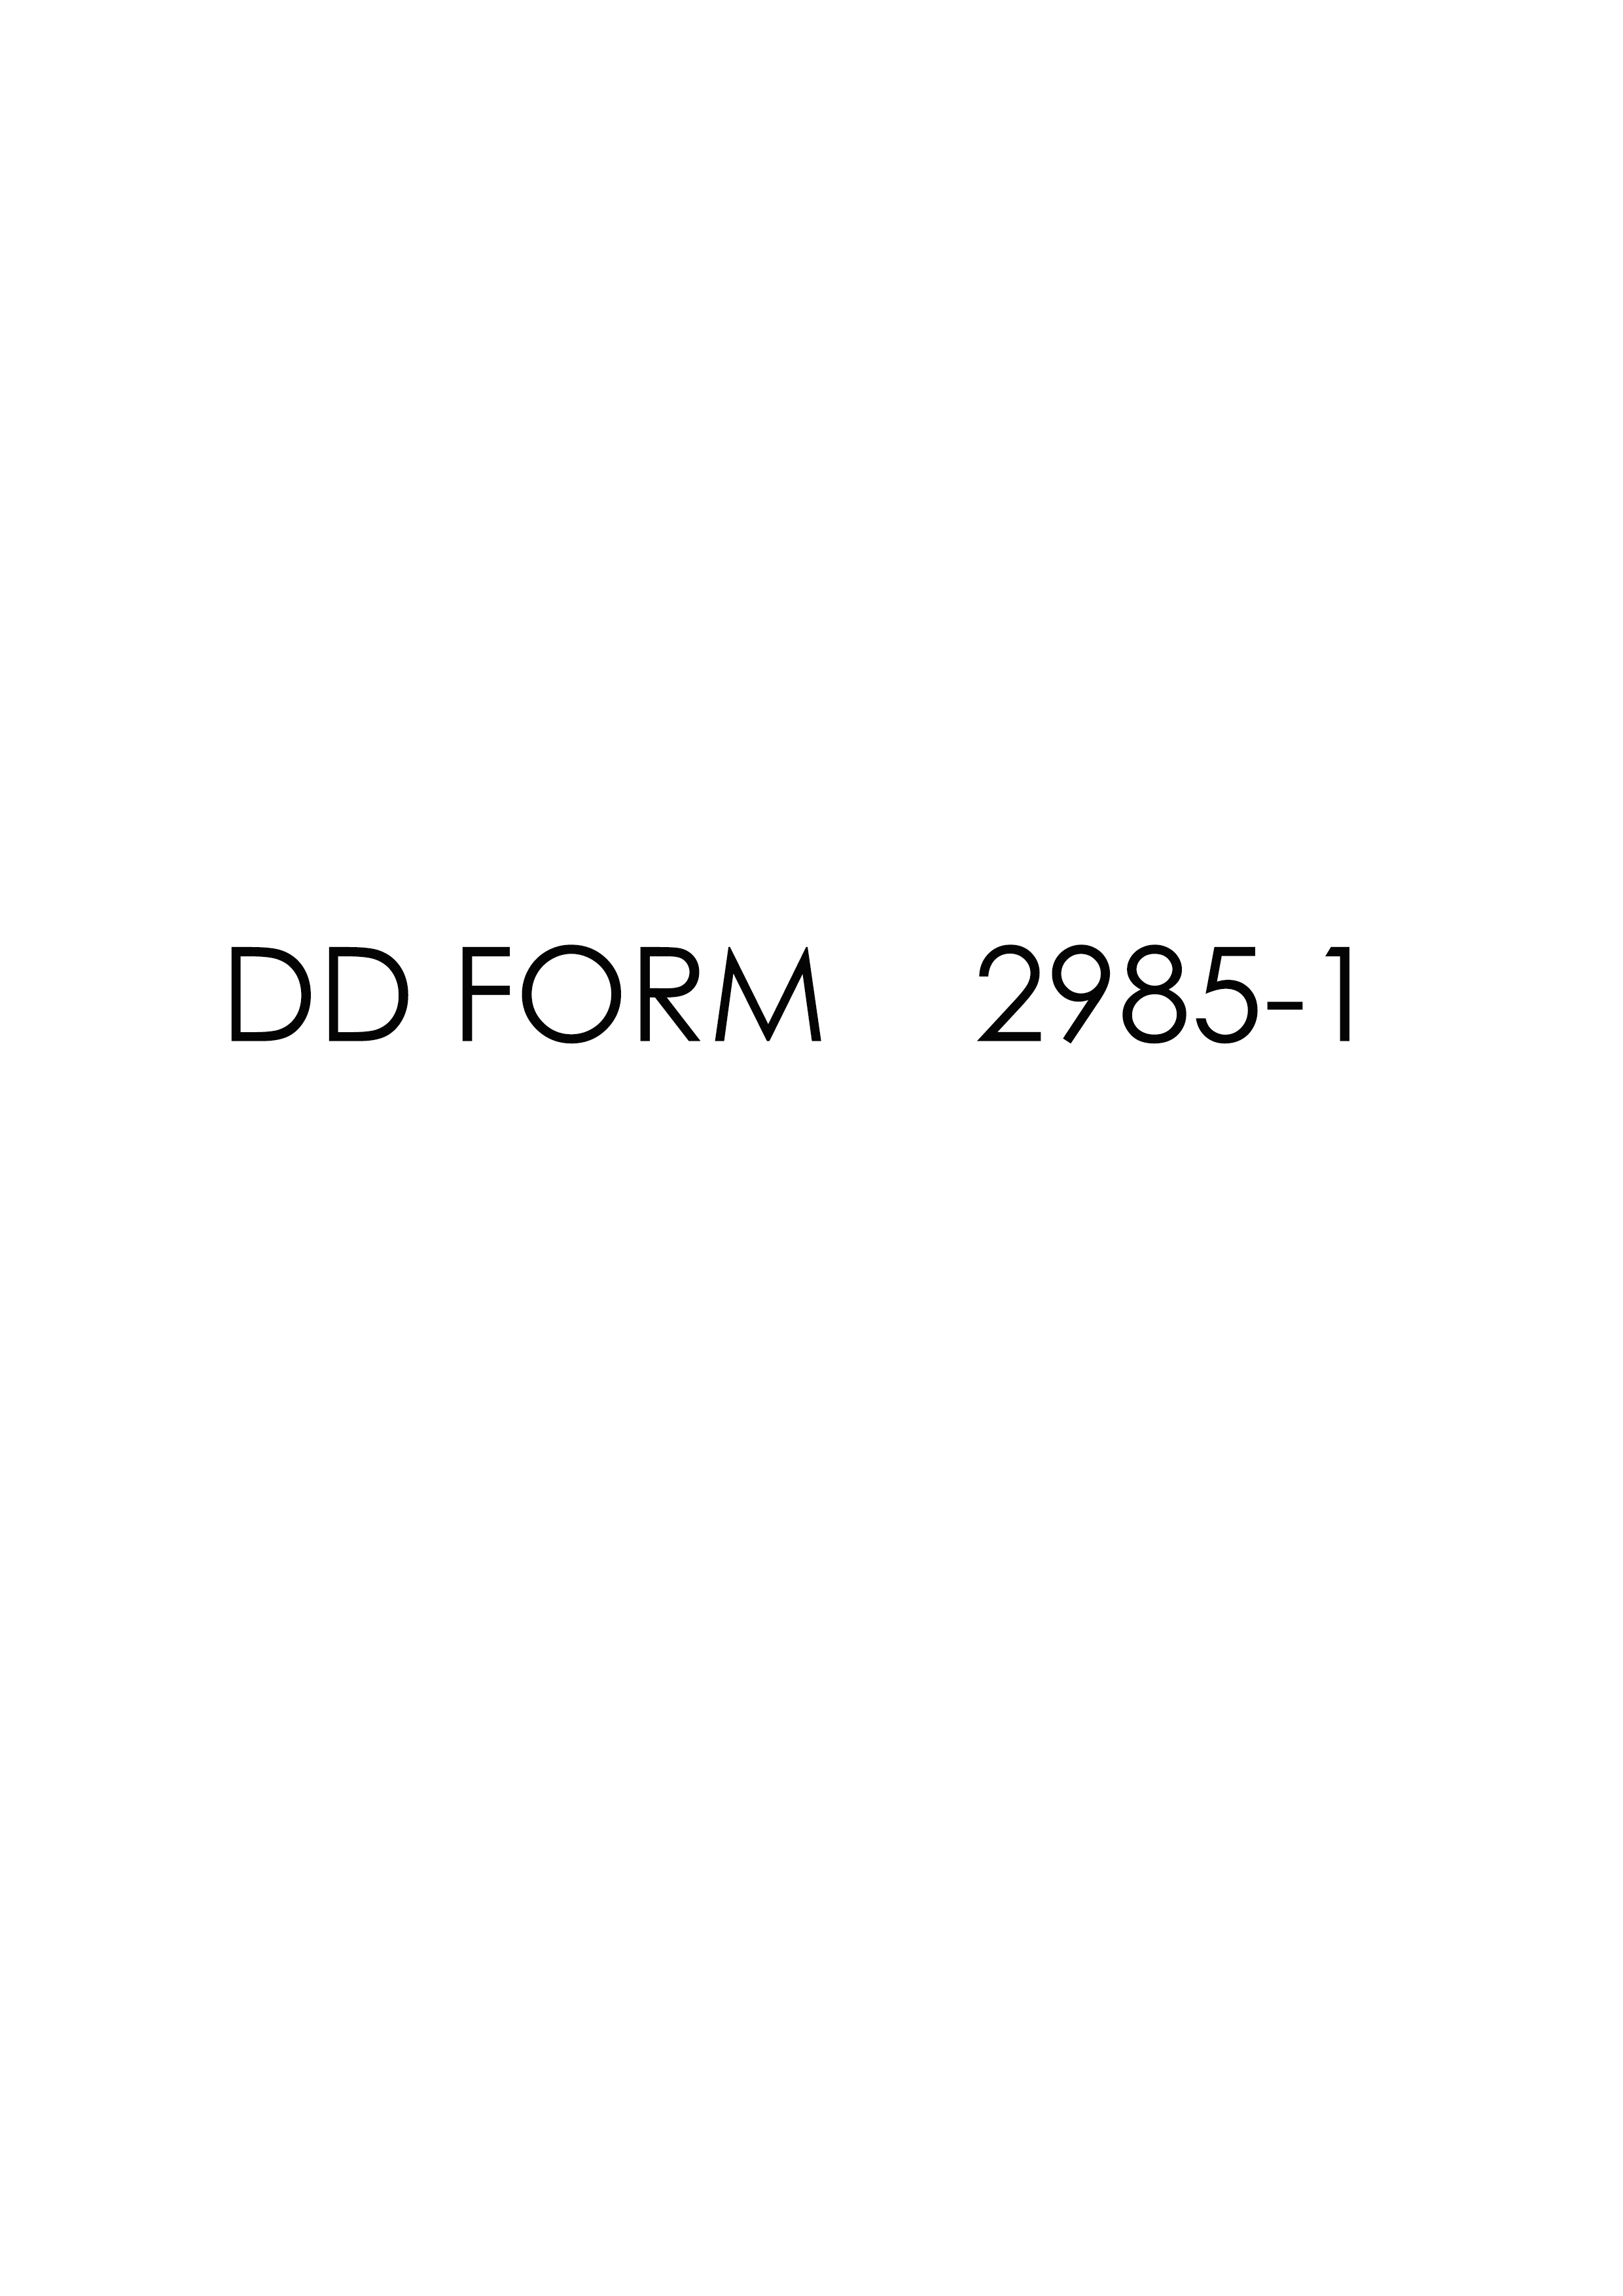 Download dd 2985-1 Form